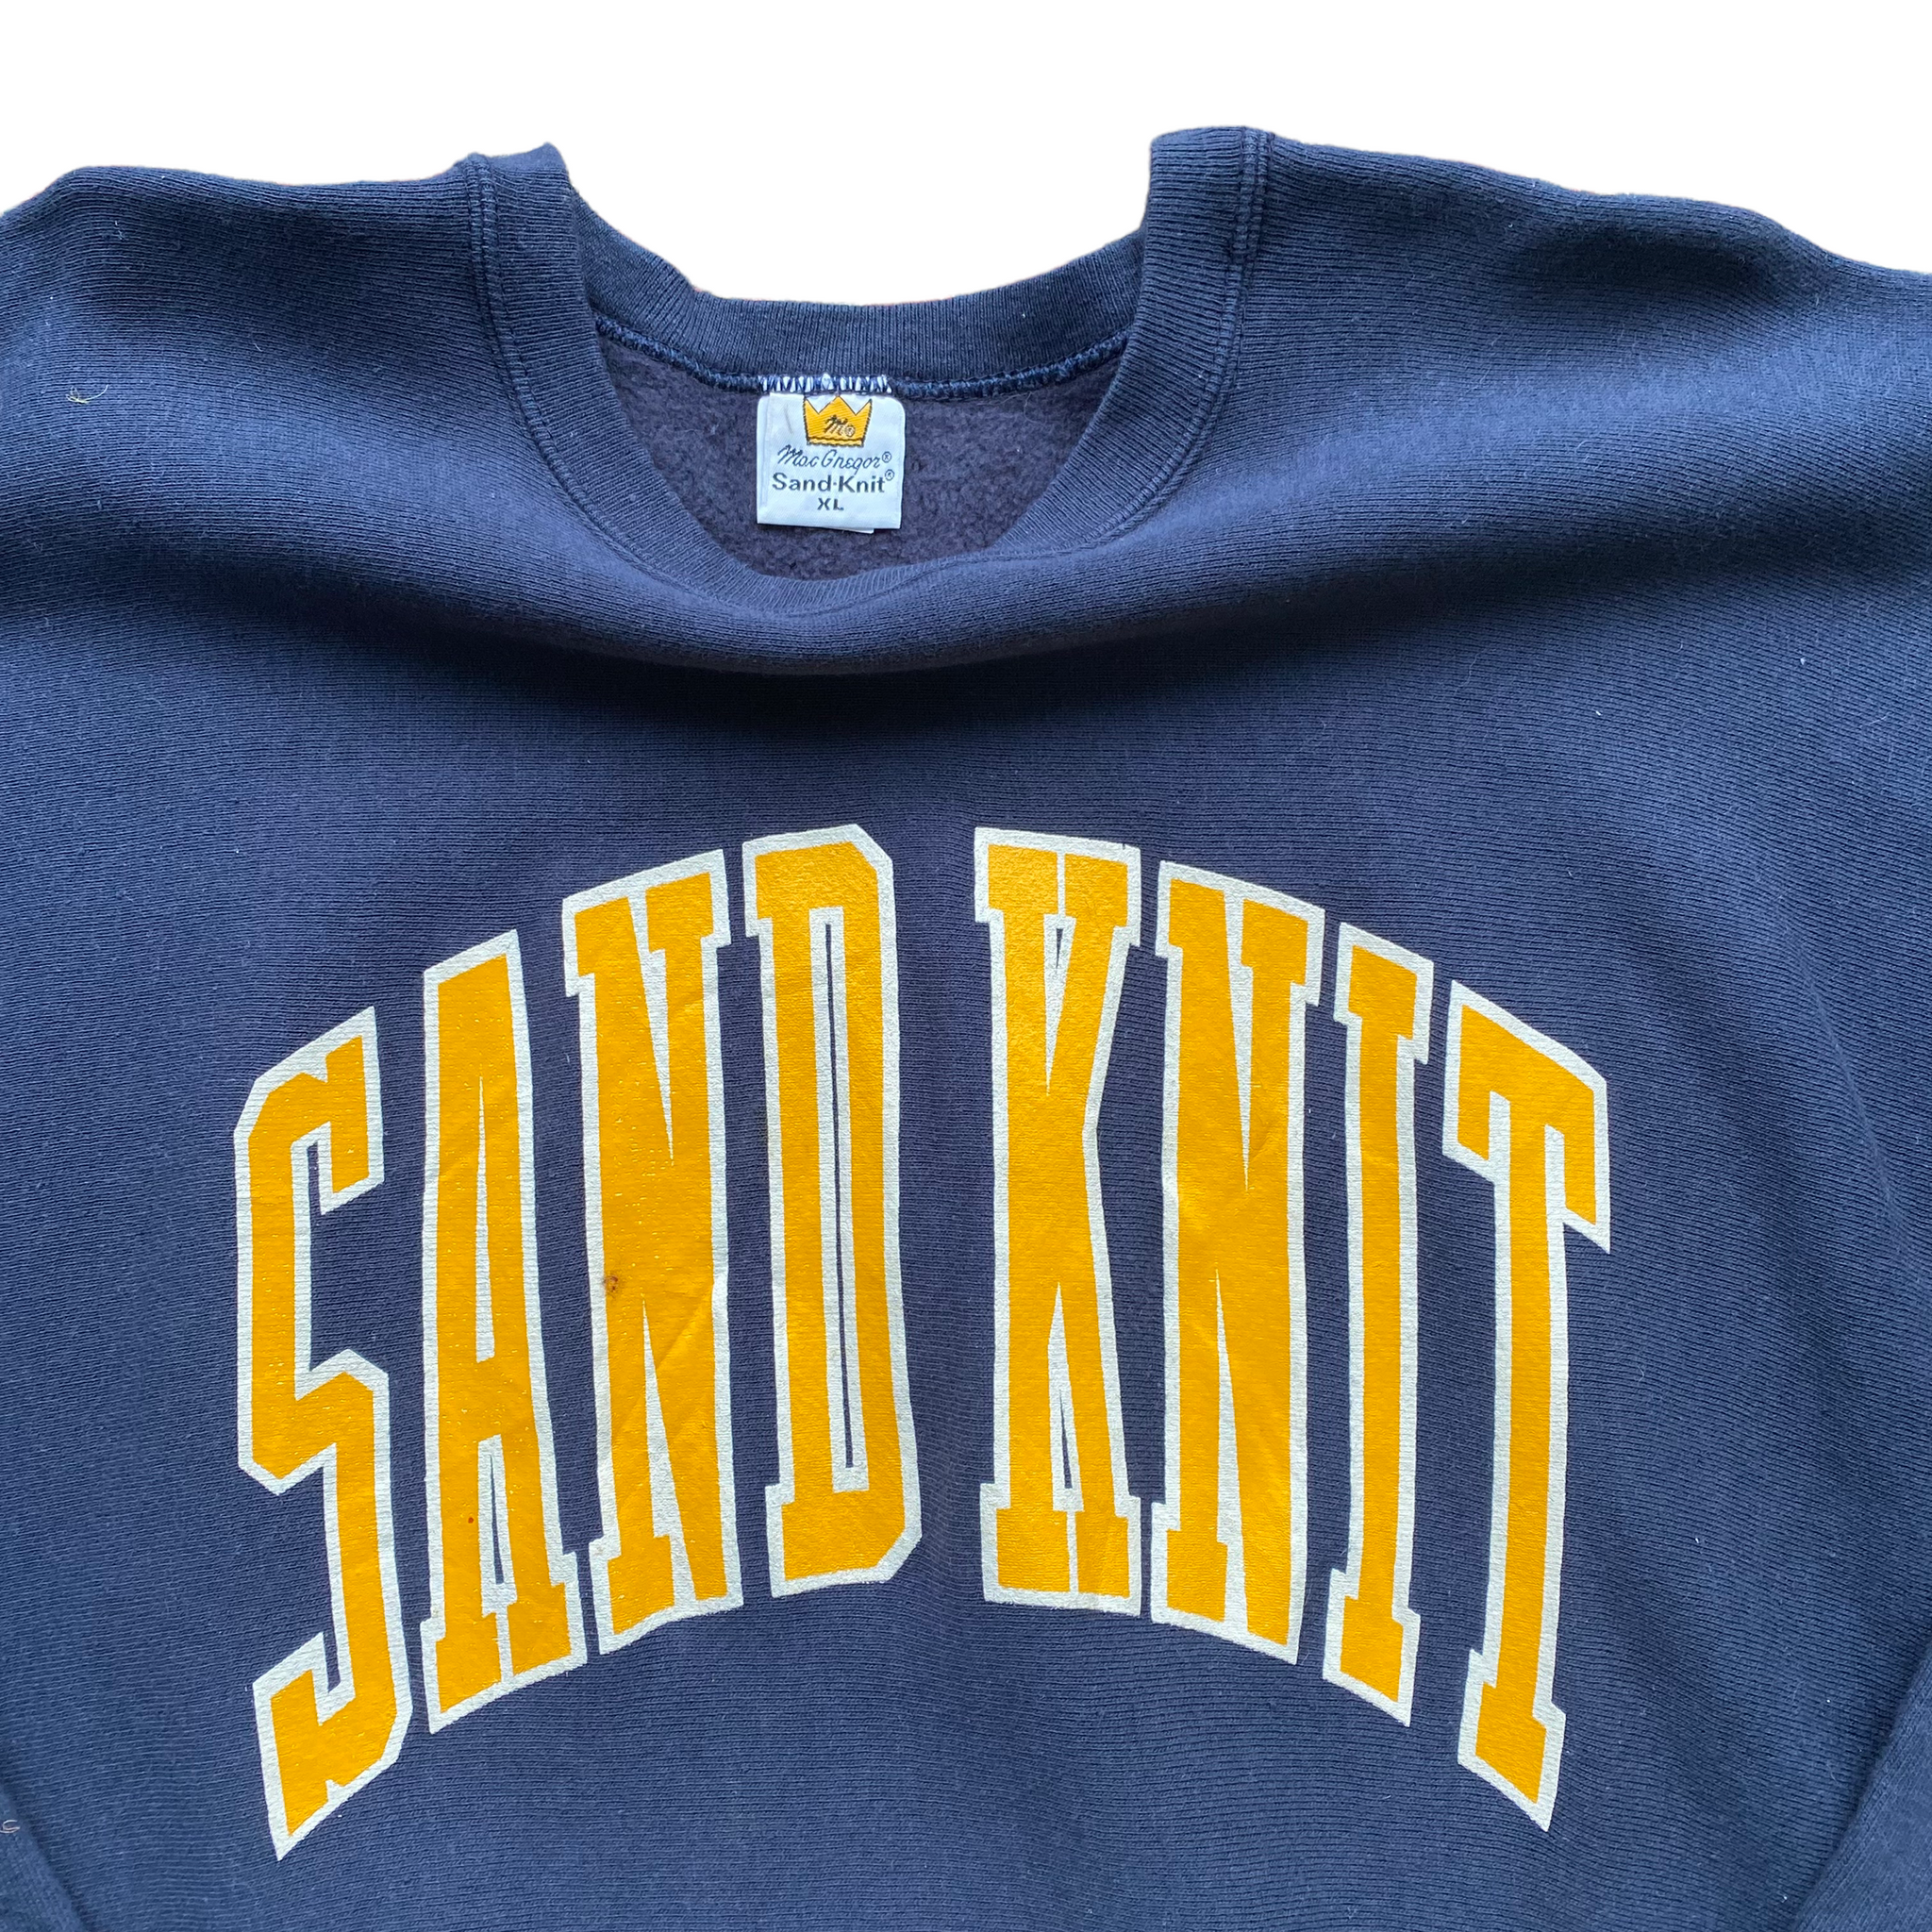 Sand knit reverse weave crewneck XL